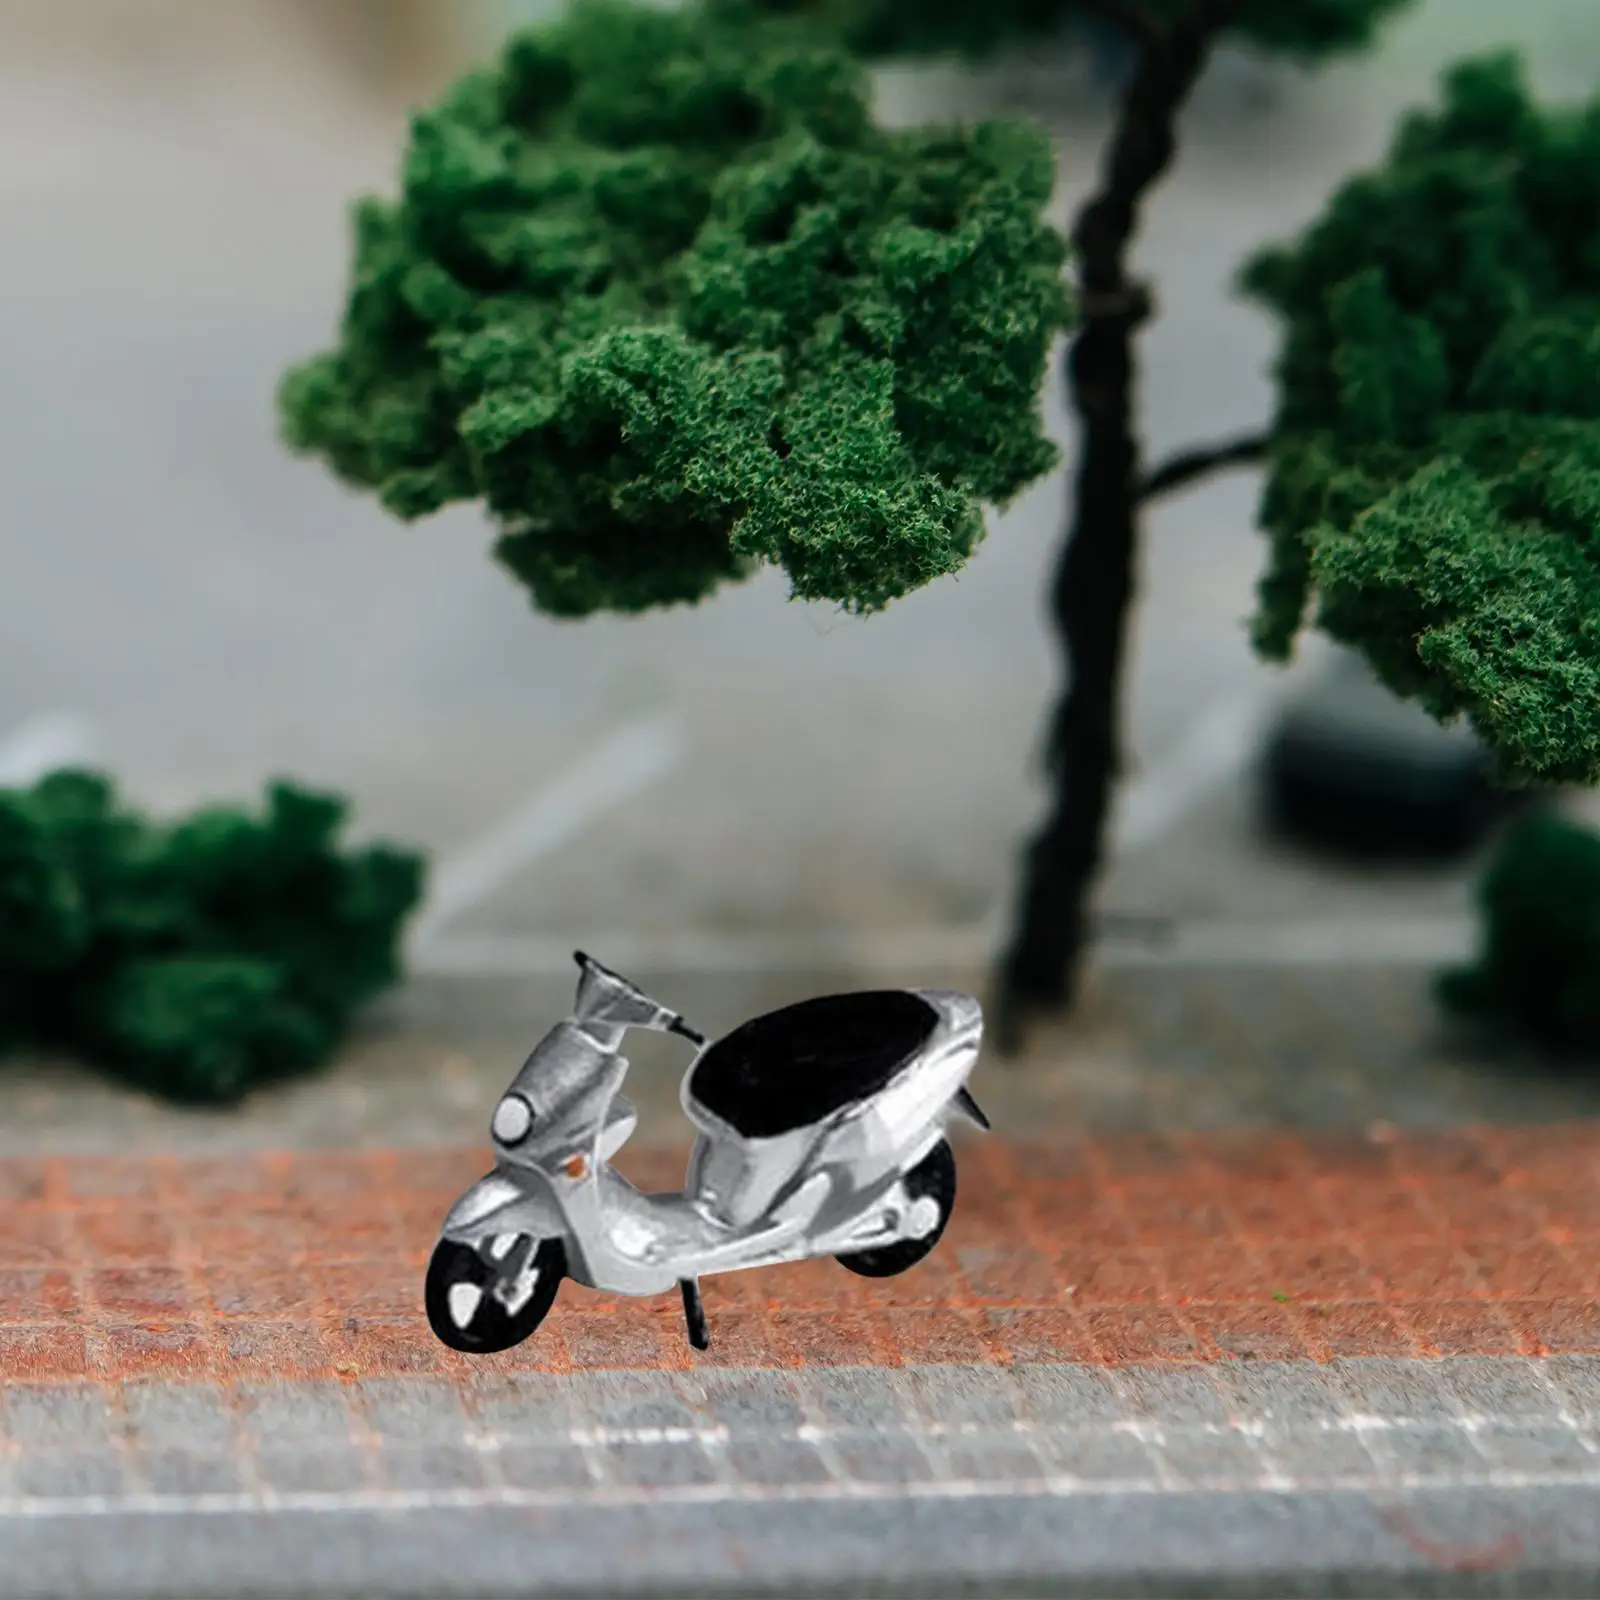 1/64 Motorcycle Model Figure Mini Vehicles Toys for DIY Scene Dollhouse